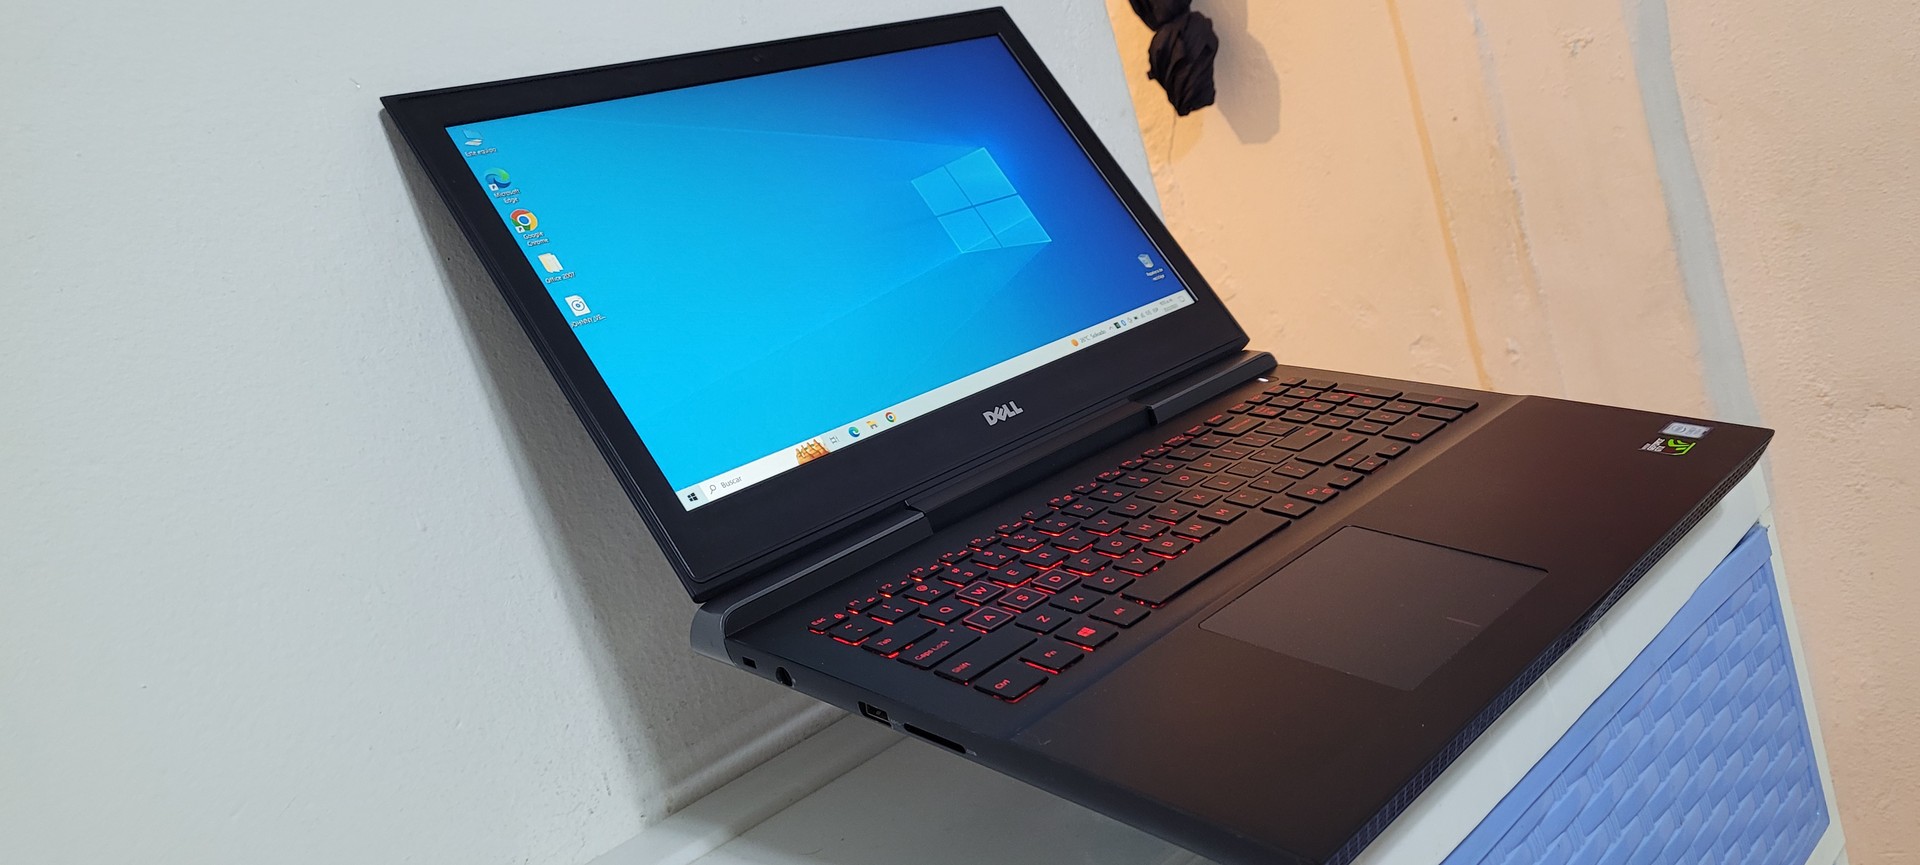 computadoras y laptops - Laptop Dell Gaming Core i7 7ma Ram 16gb Nvidea Gtx 1050Ti 12gb